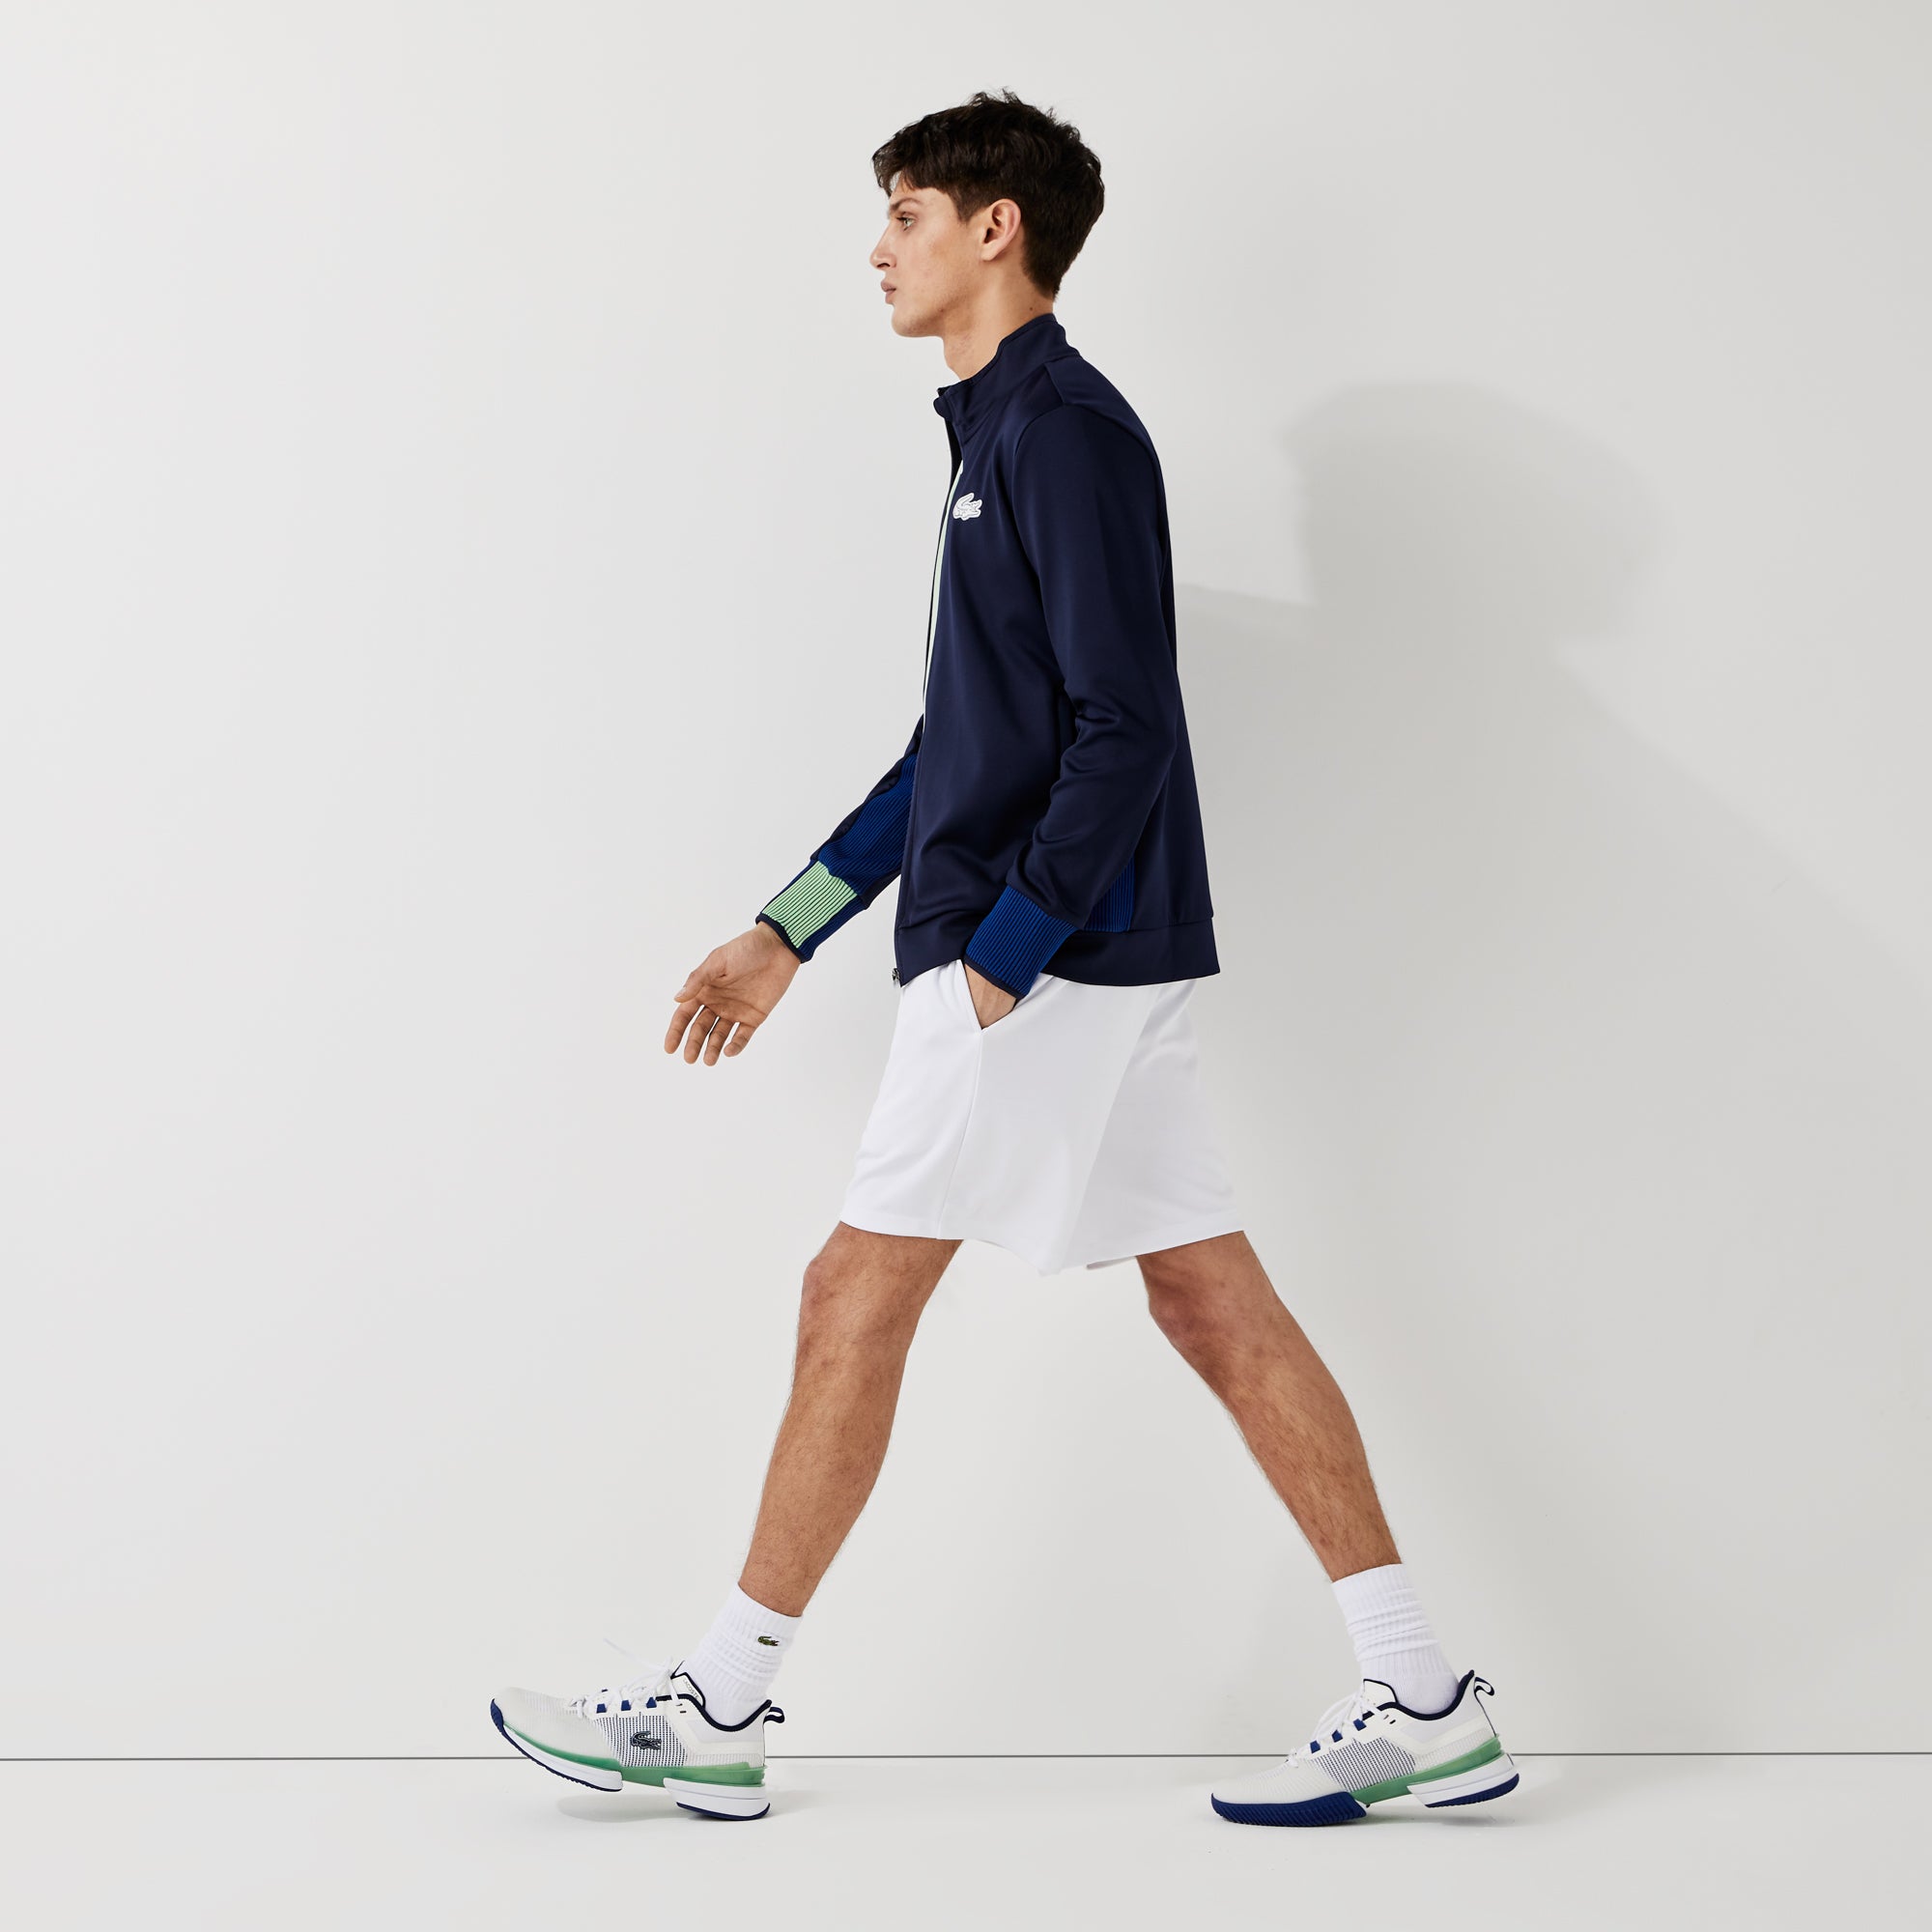 Lacoste Men's Jacquard Tennis Shorts White (5)